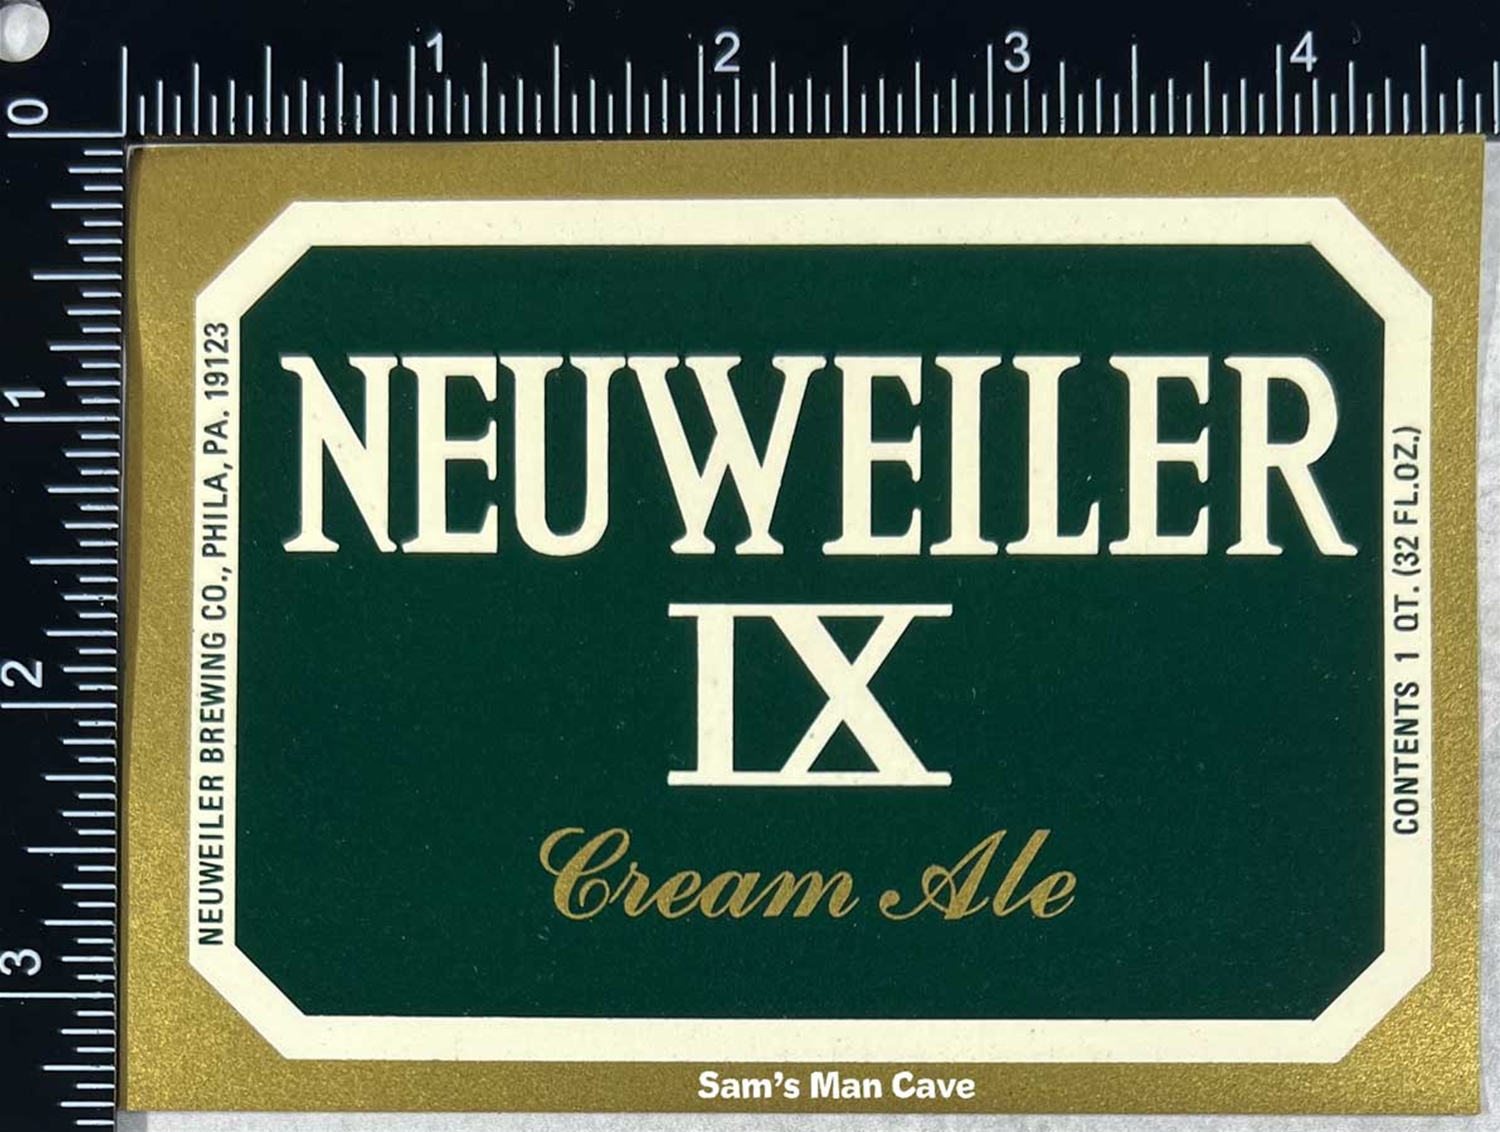 Neuweiler IX Cream Ale Label